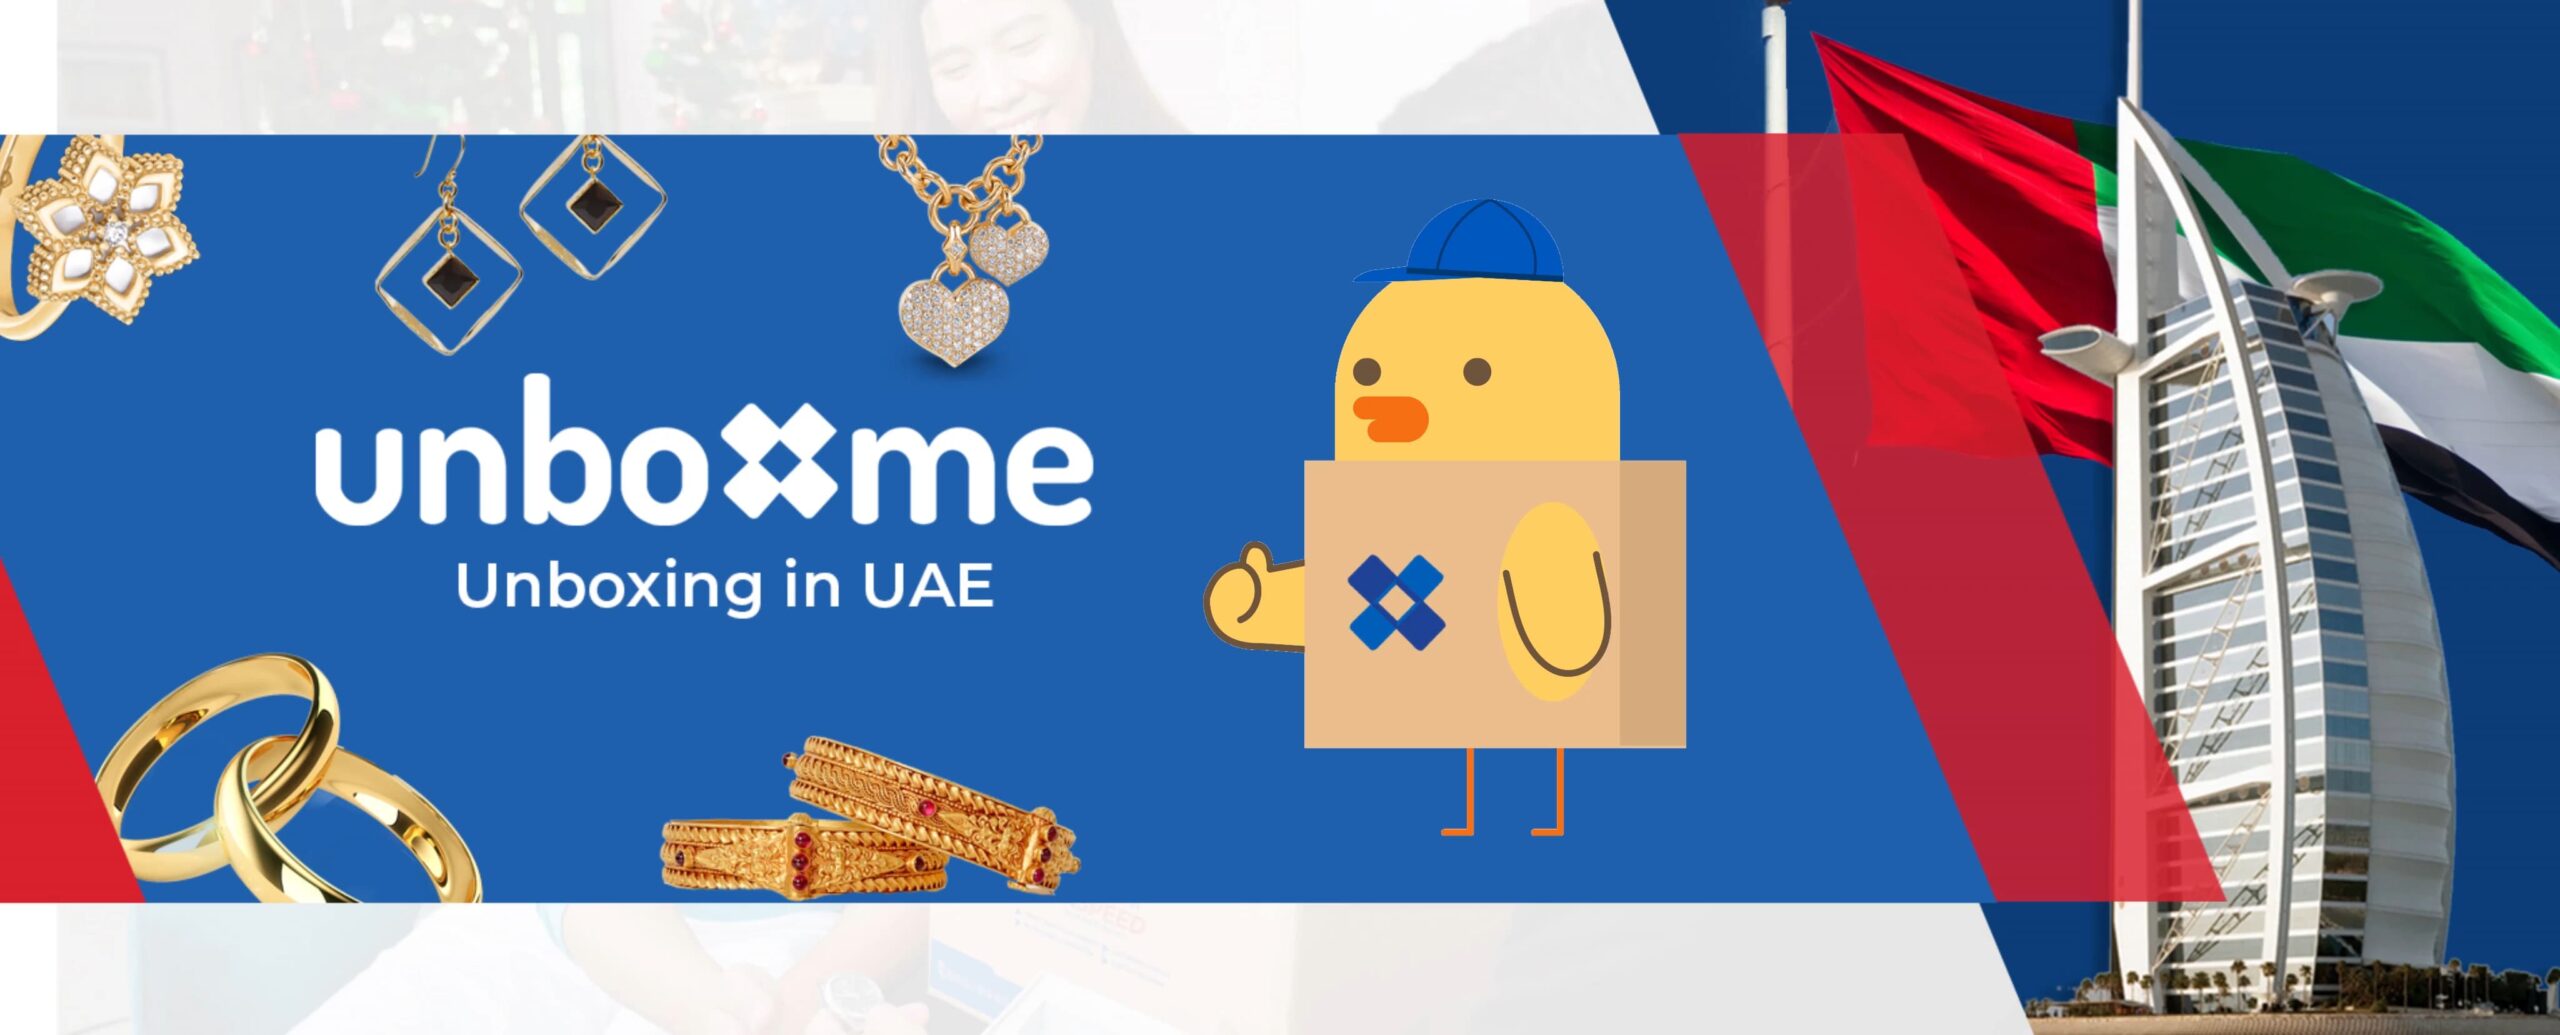 Unboxme_Web Banner-Gifty UAE